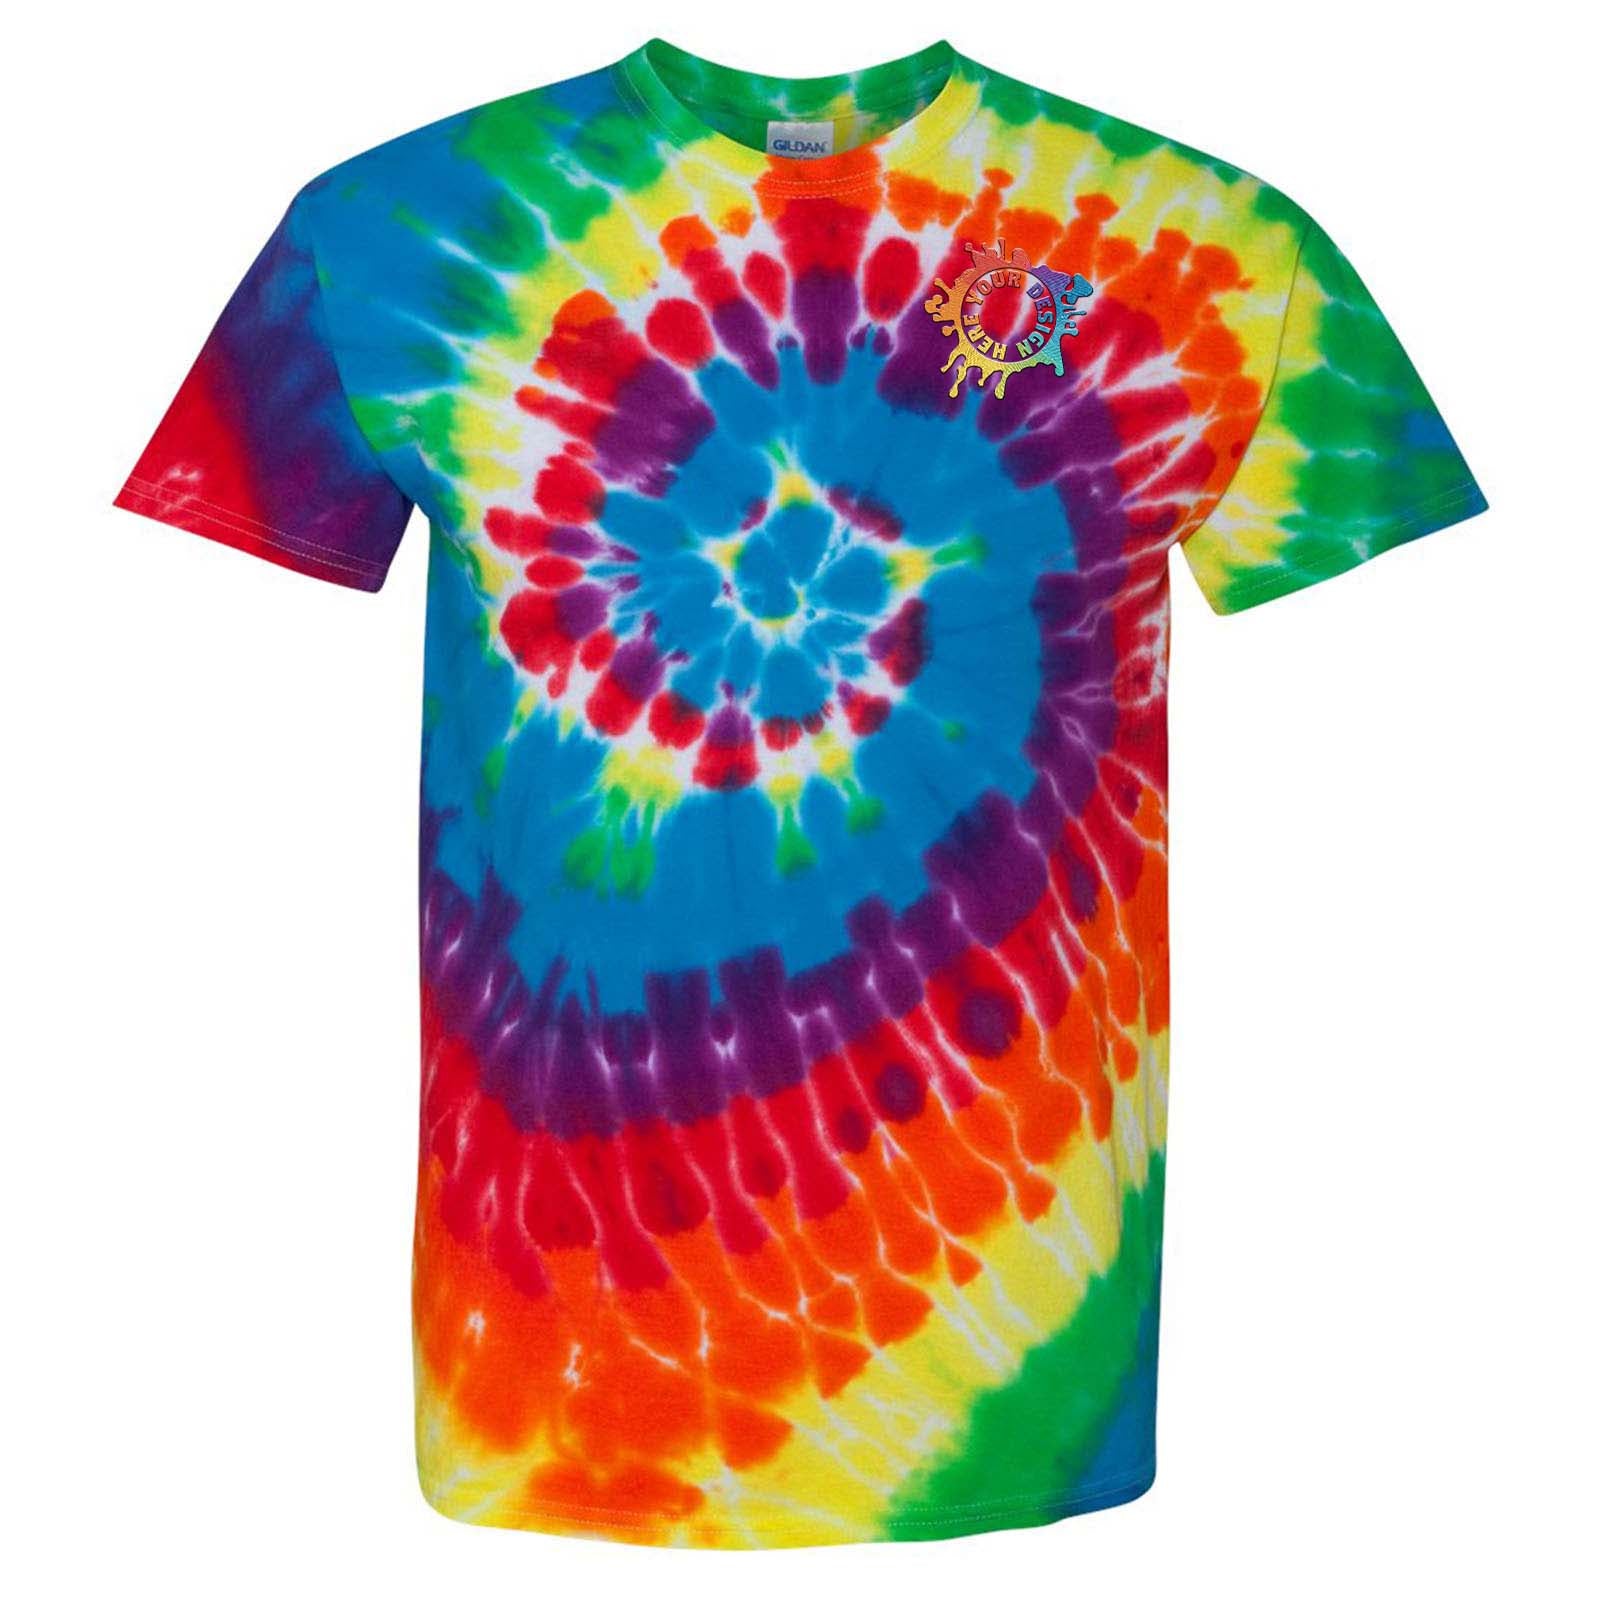 Dyenomite 100% Cotton Unisex Multicolor Spiral Tie-Dye T-Shirt Embroidery - Mato & Hash